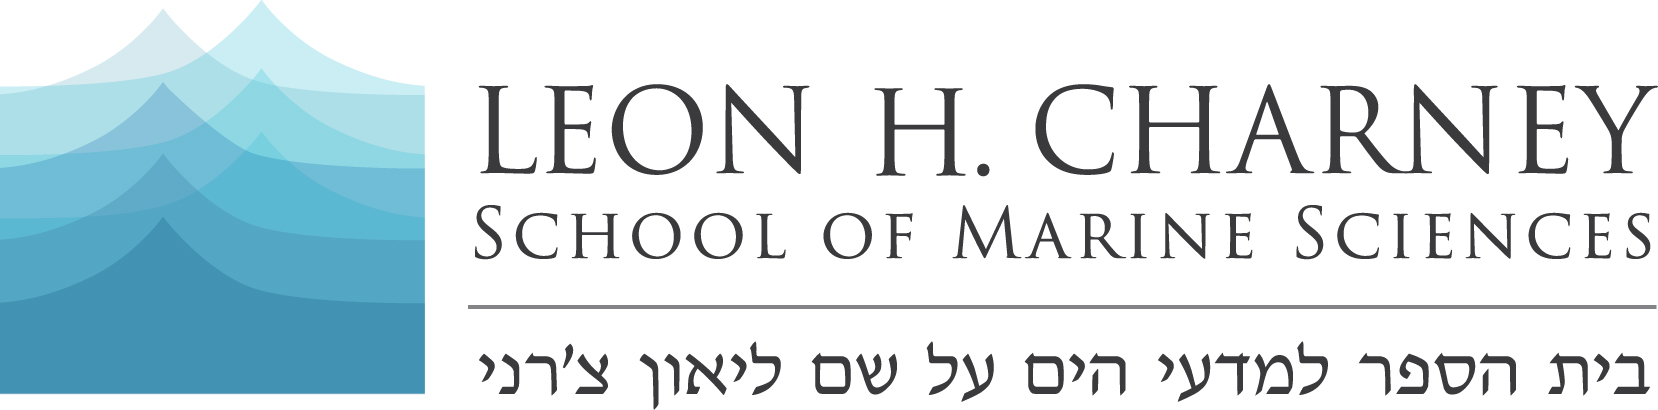 Leon H. Charney School of Marine Sciences logo